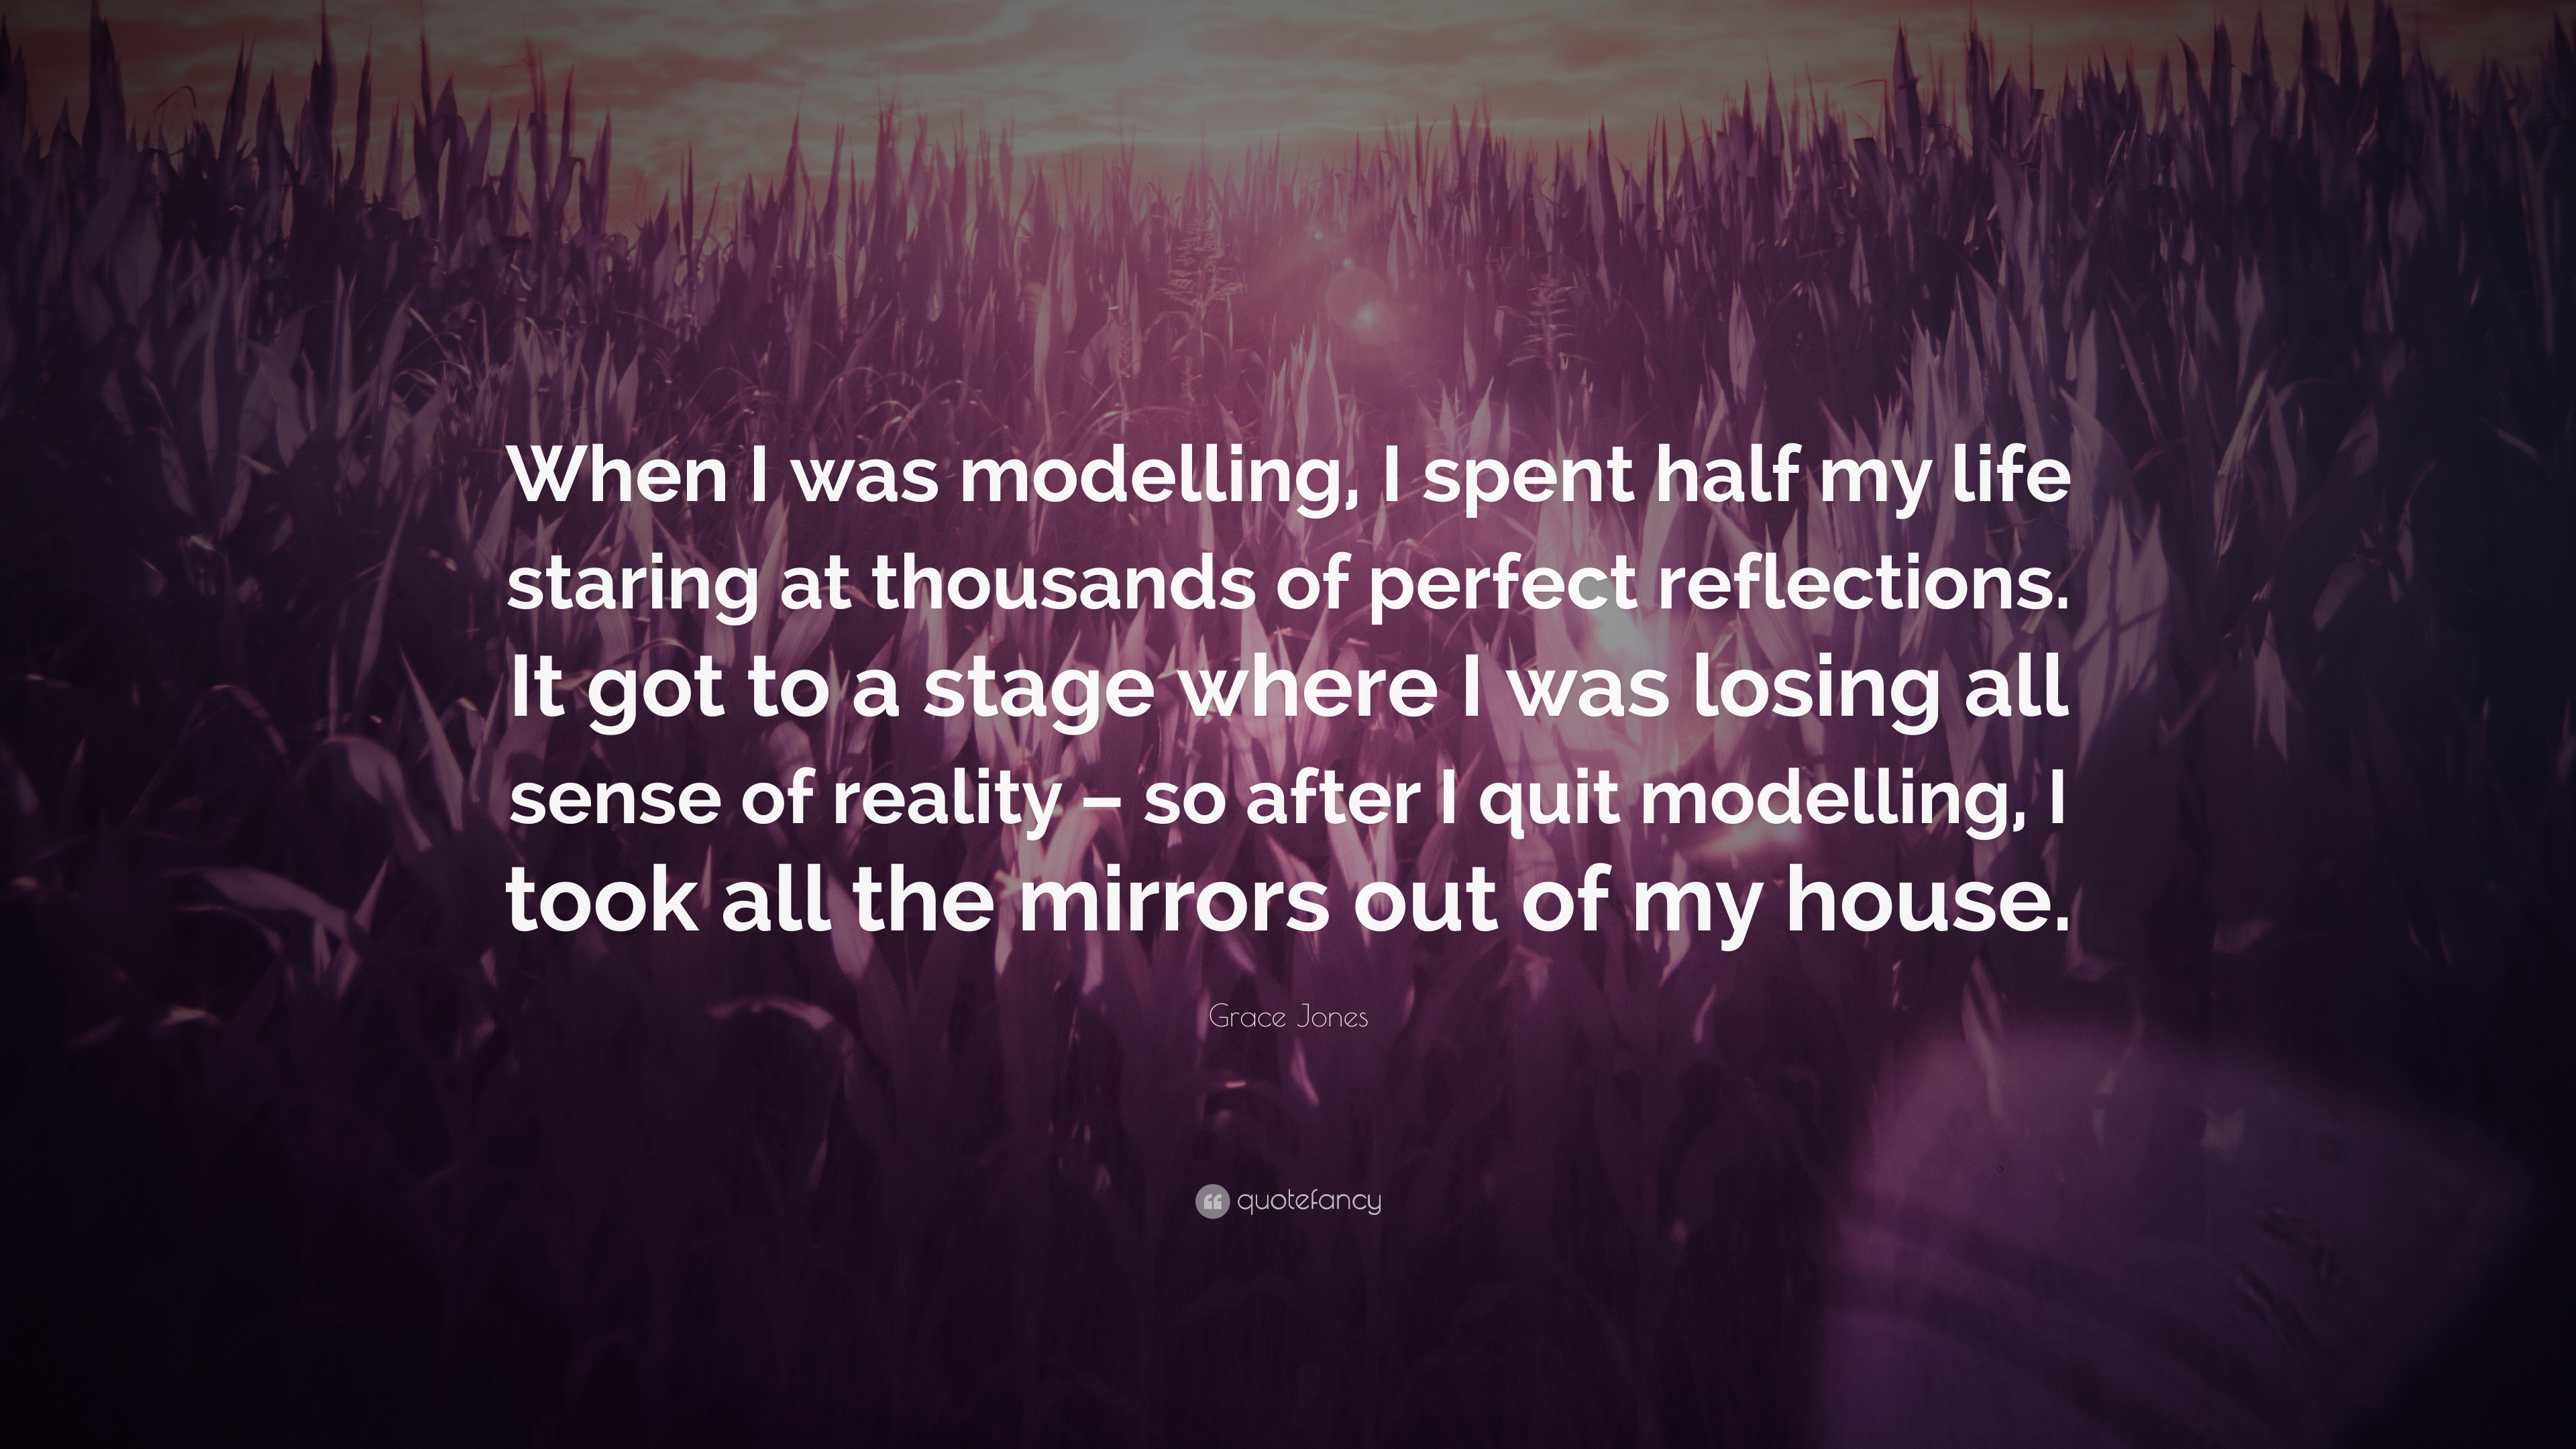 Grace Jones Quote: “When I was modelling, I spent half my life